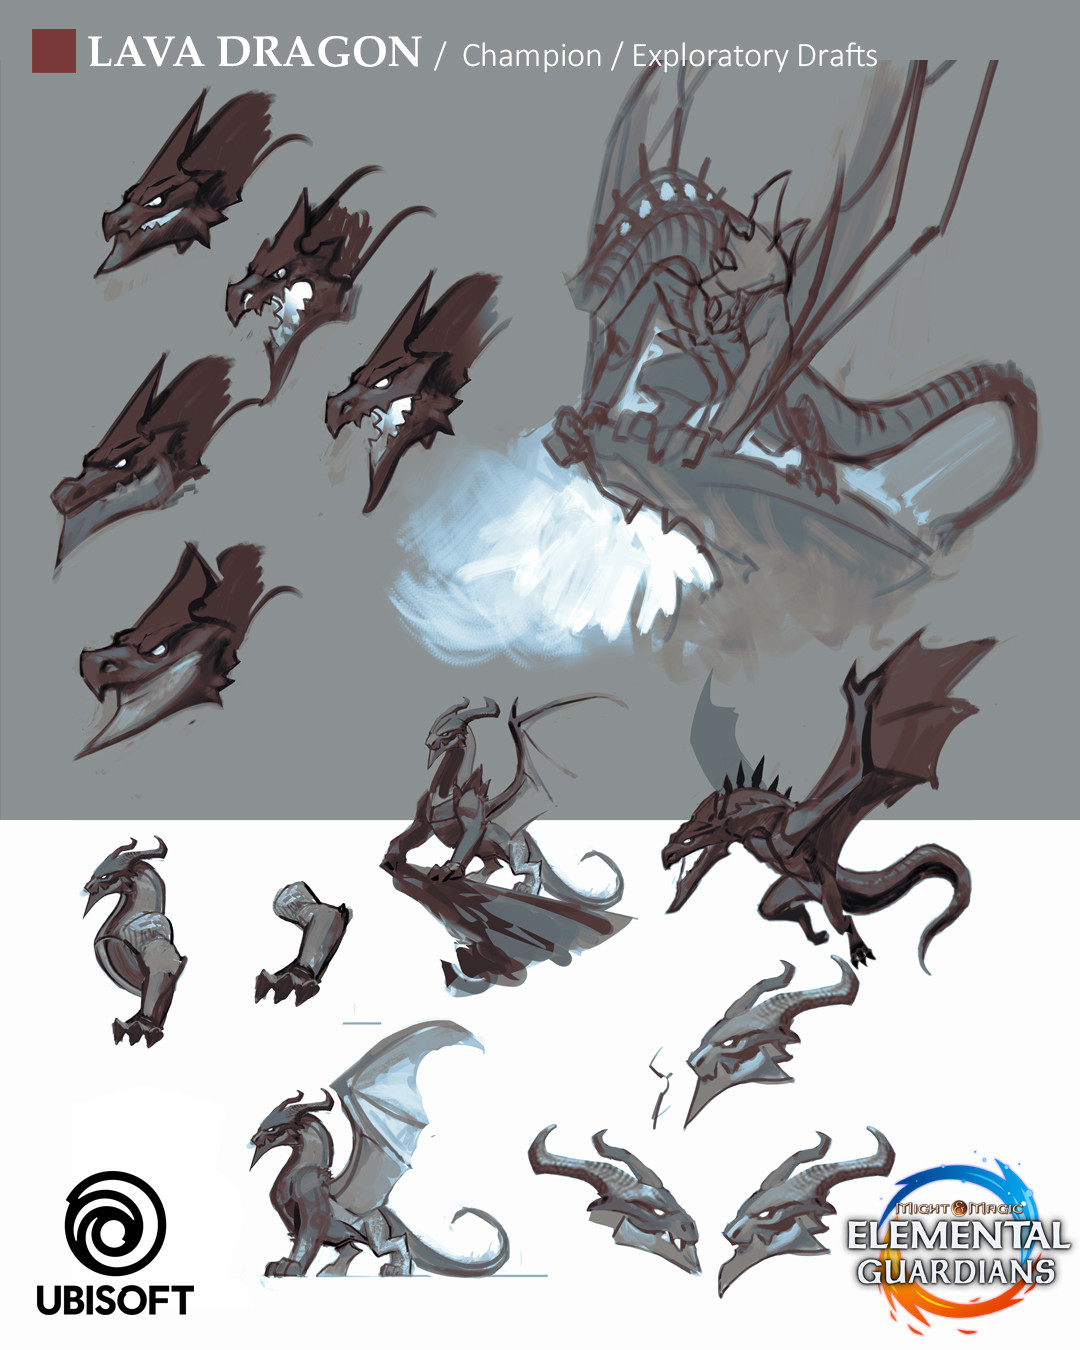 Lava Dragon - Champion Version - Exploratory Drafts
(videogame Might&amp;Magic Elemental Guardians)